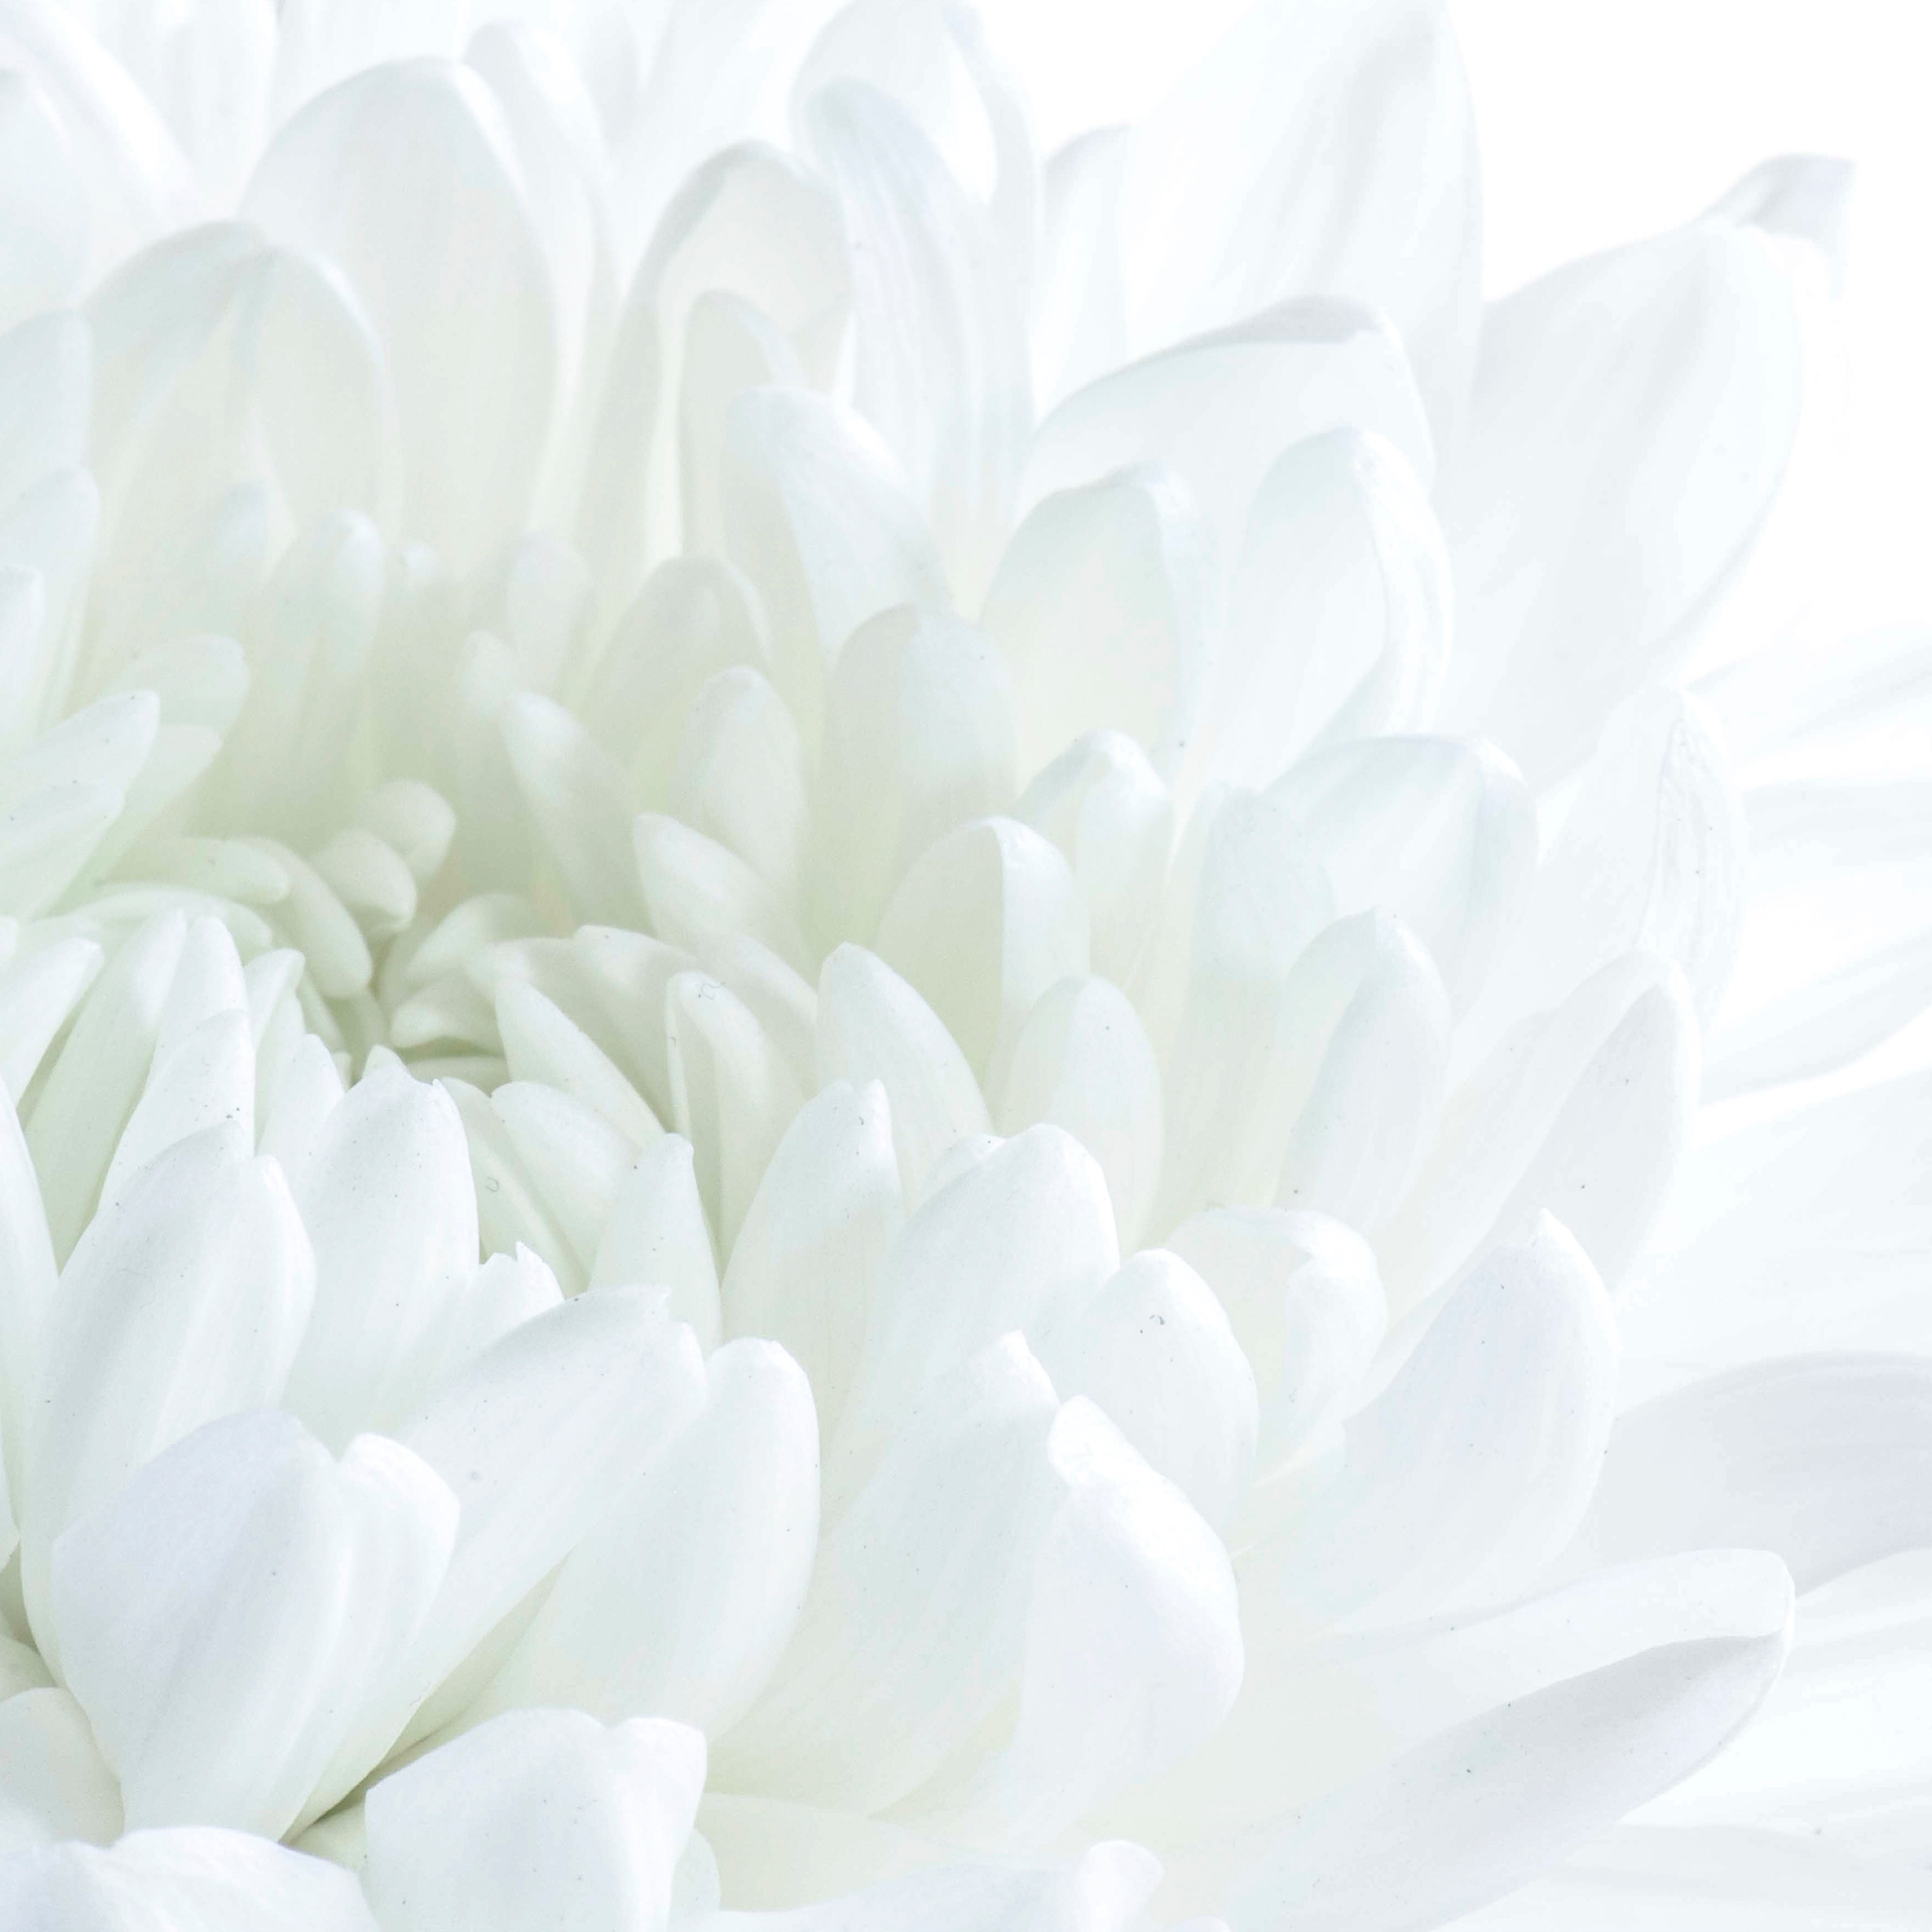 Fleur Blanche (Solar Flower) • 100ml